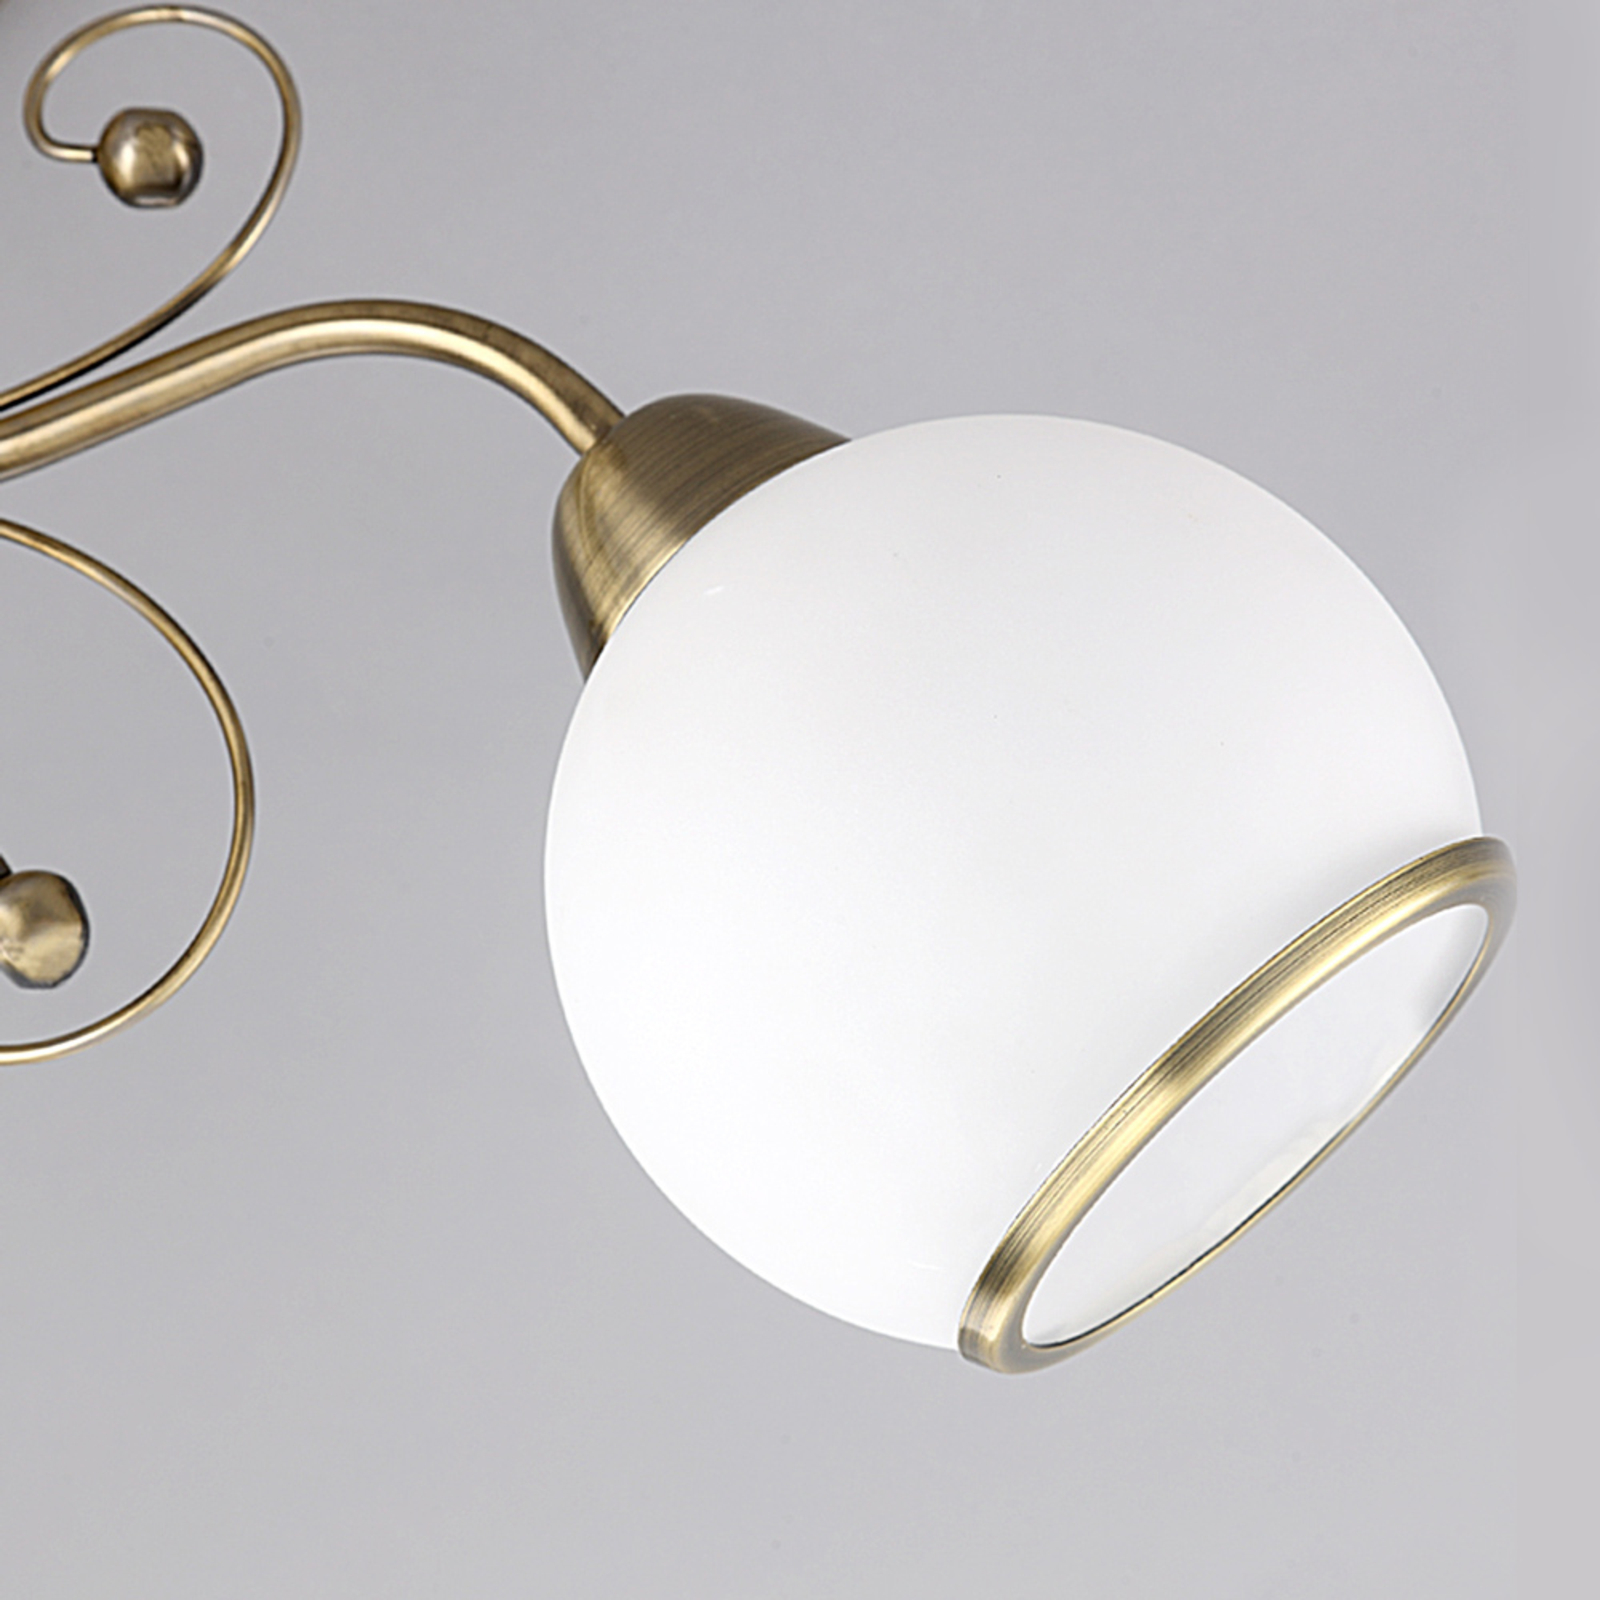 Corentin - skøn loftslampe i klassisk stil